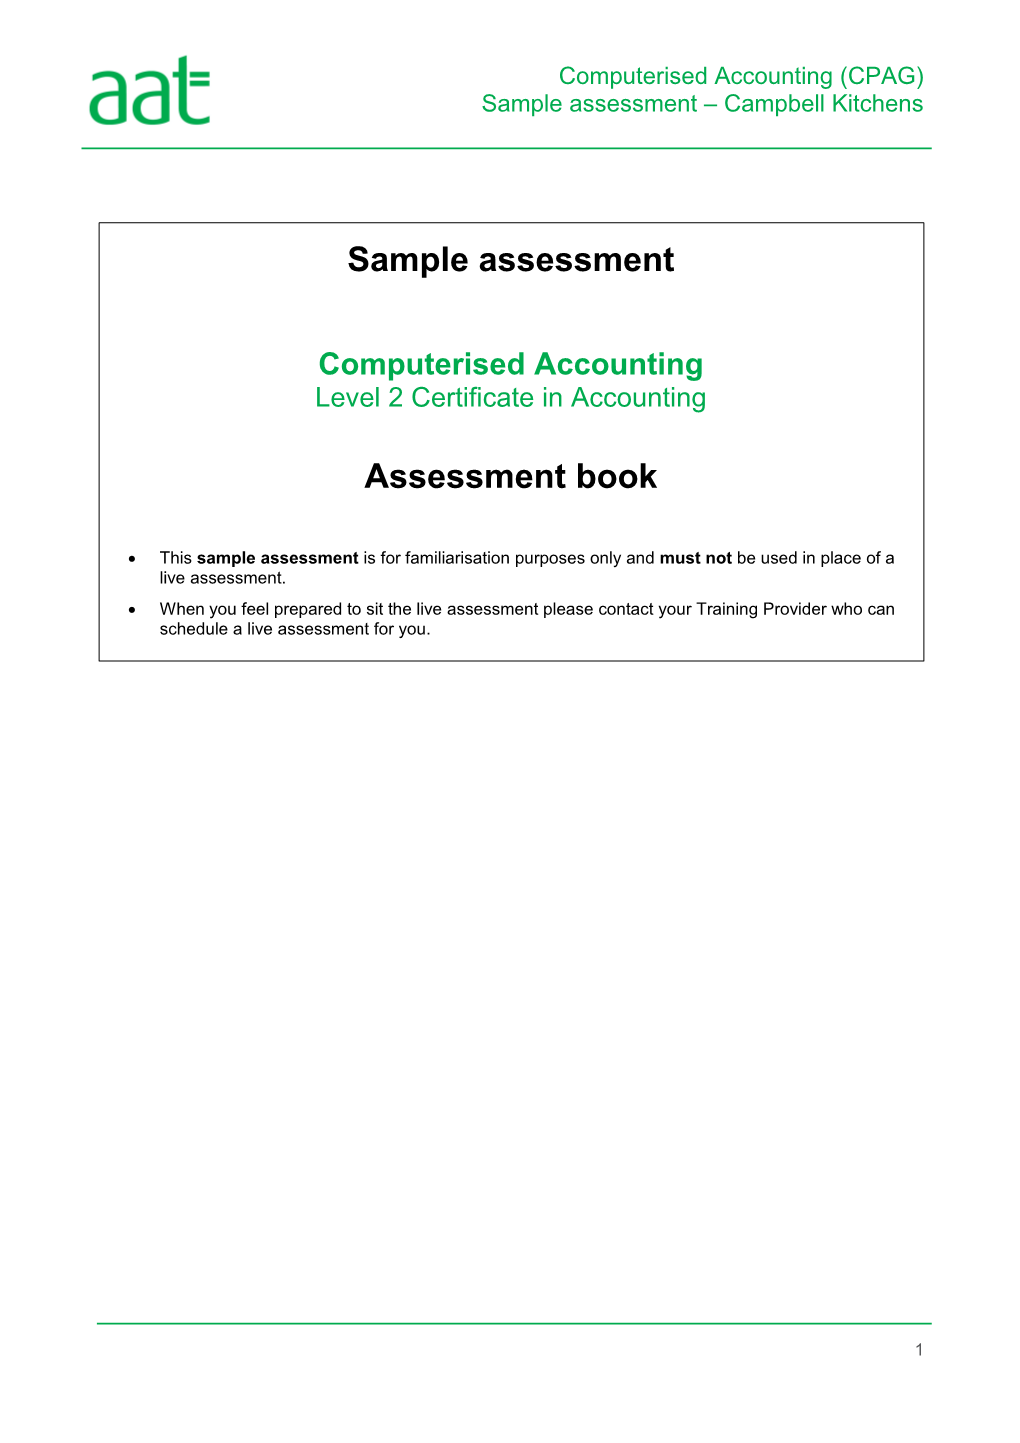 Sample Assessment Campbell Kitchens